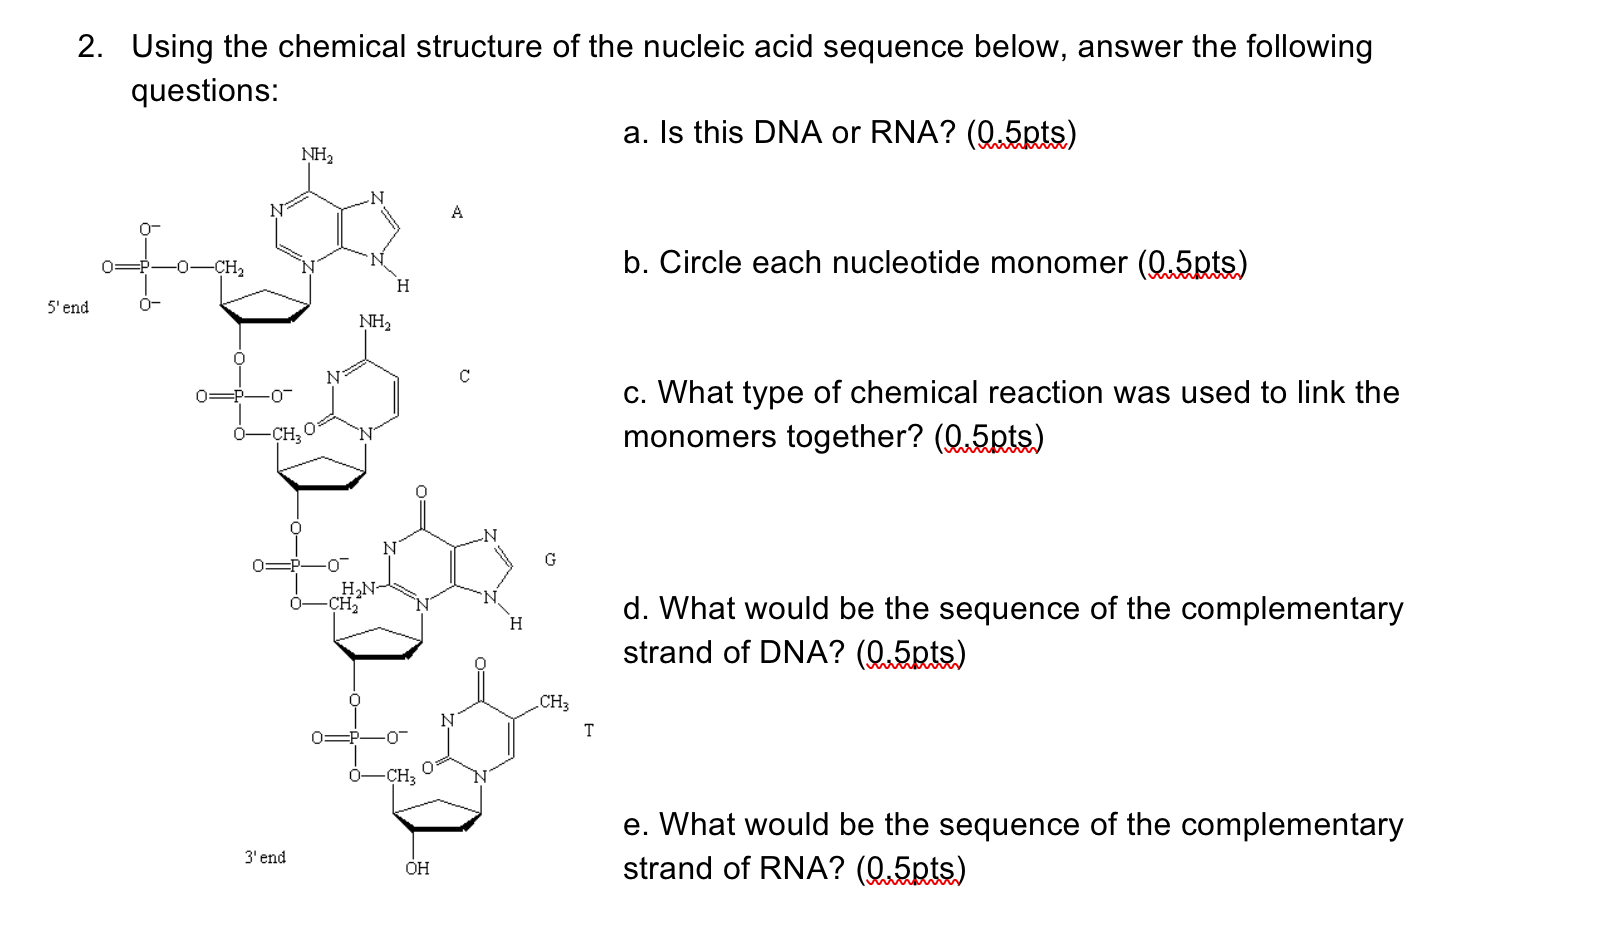 nucleotide molecule structure